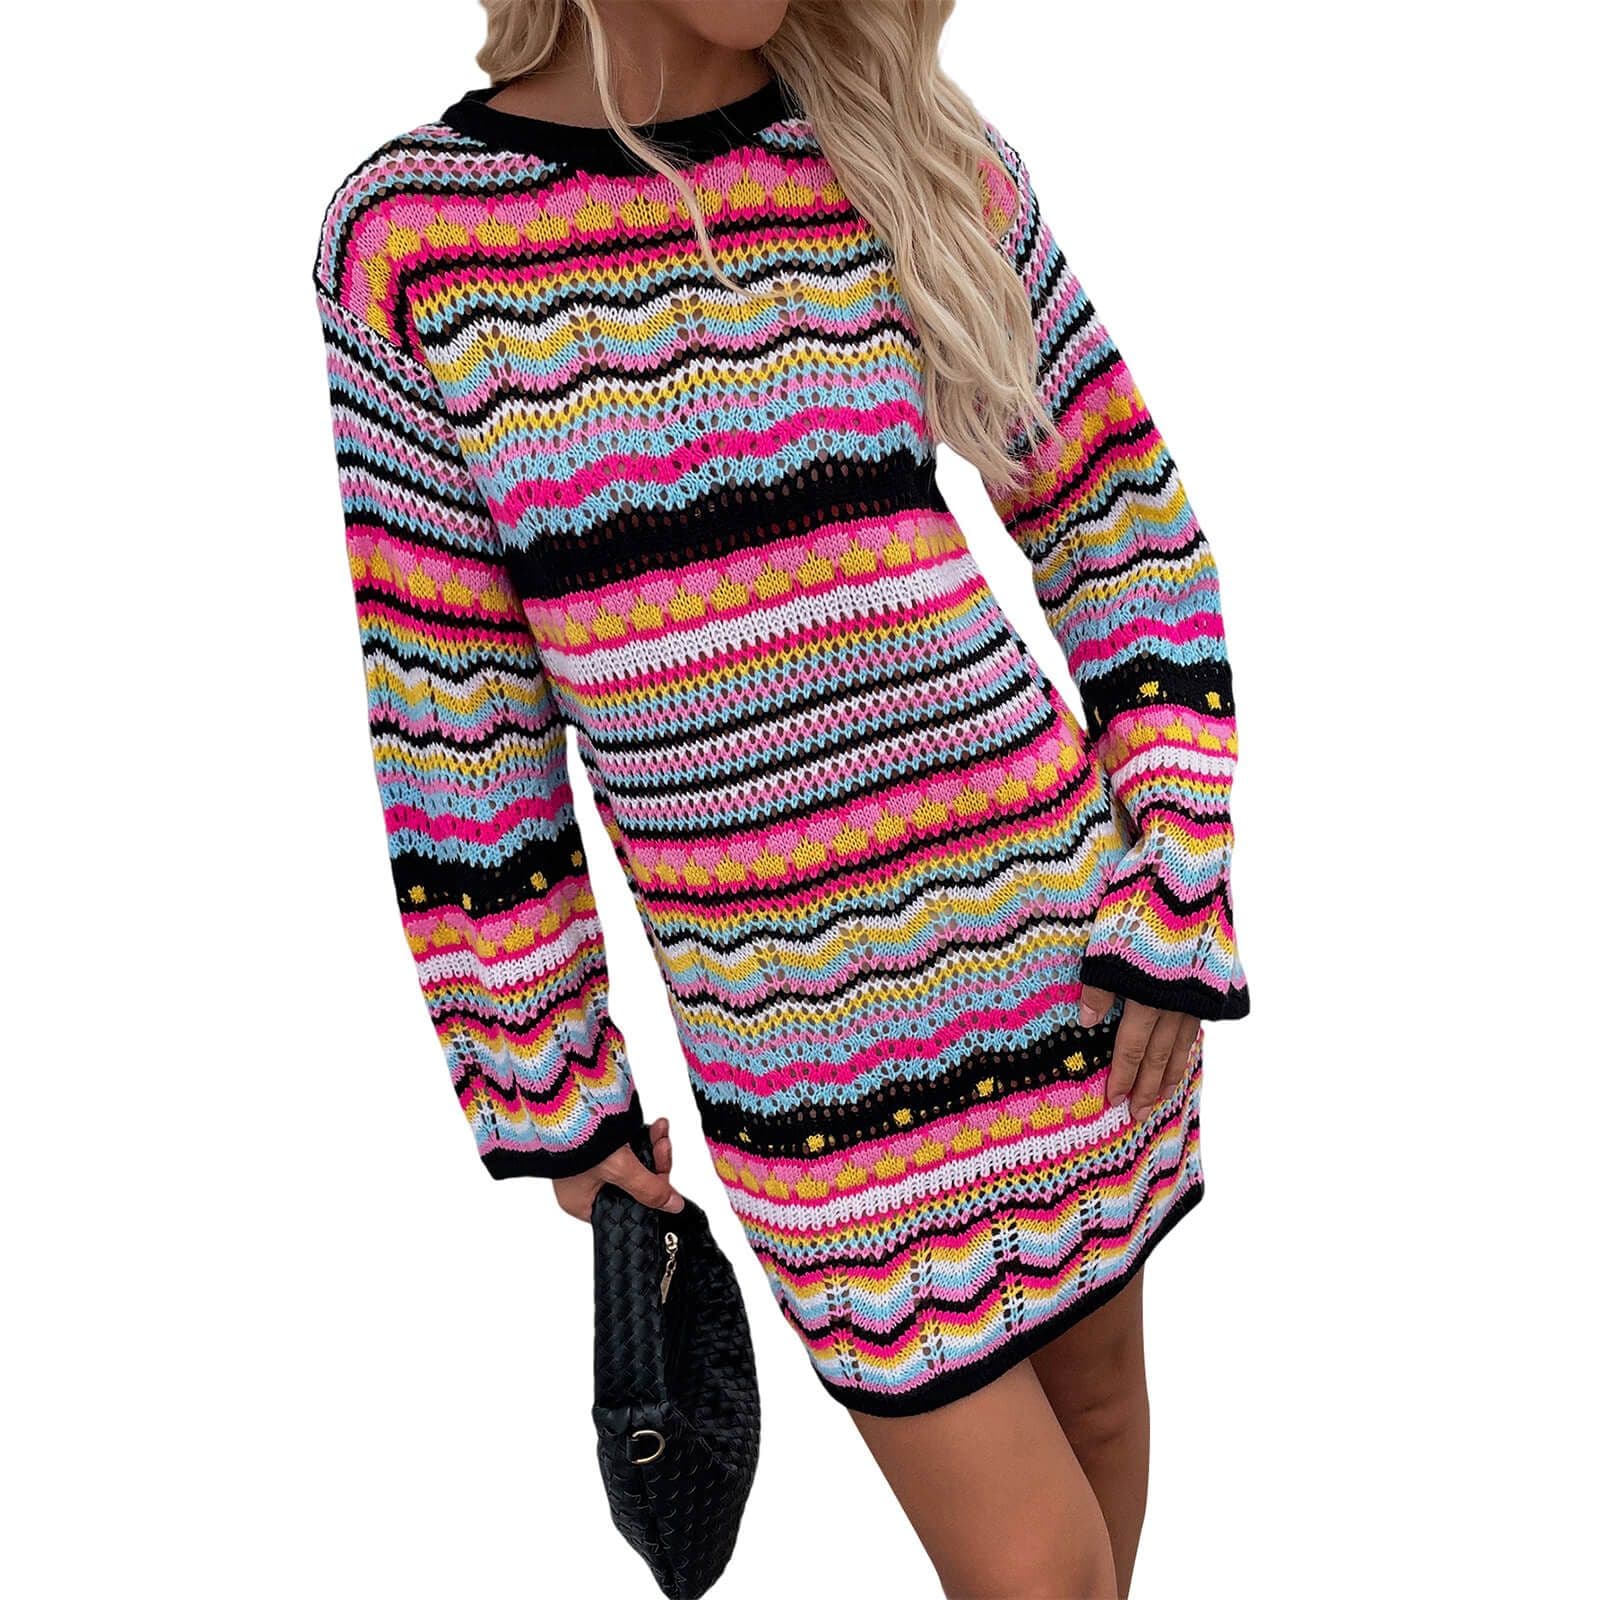 Crochet dress long sleeve striped O-neck pink